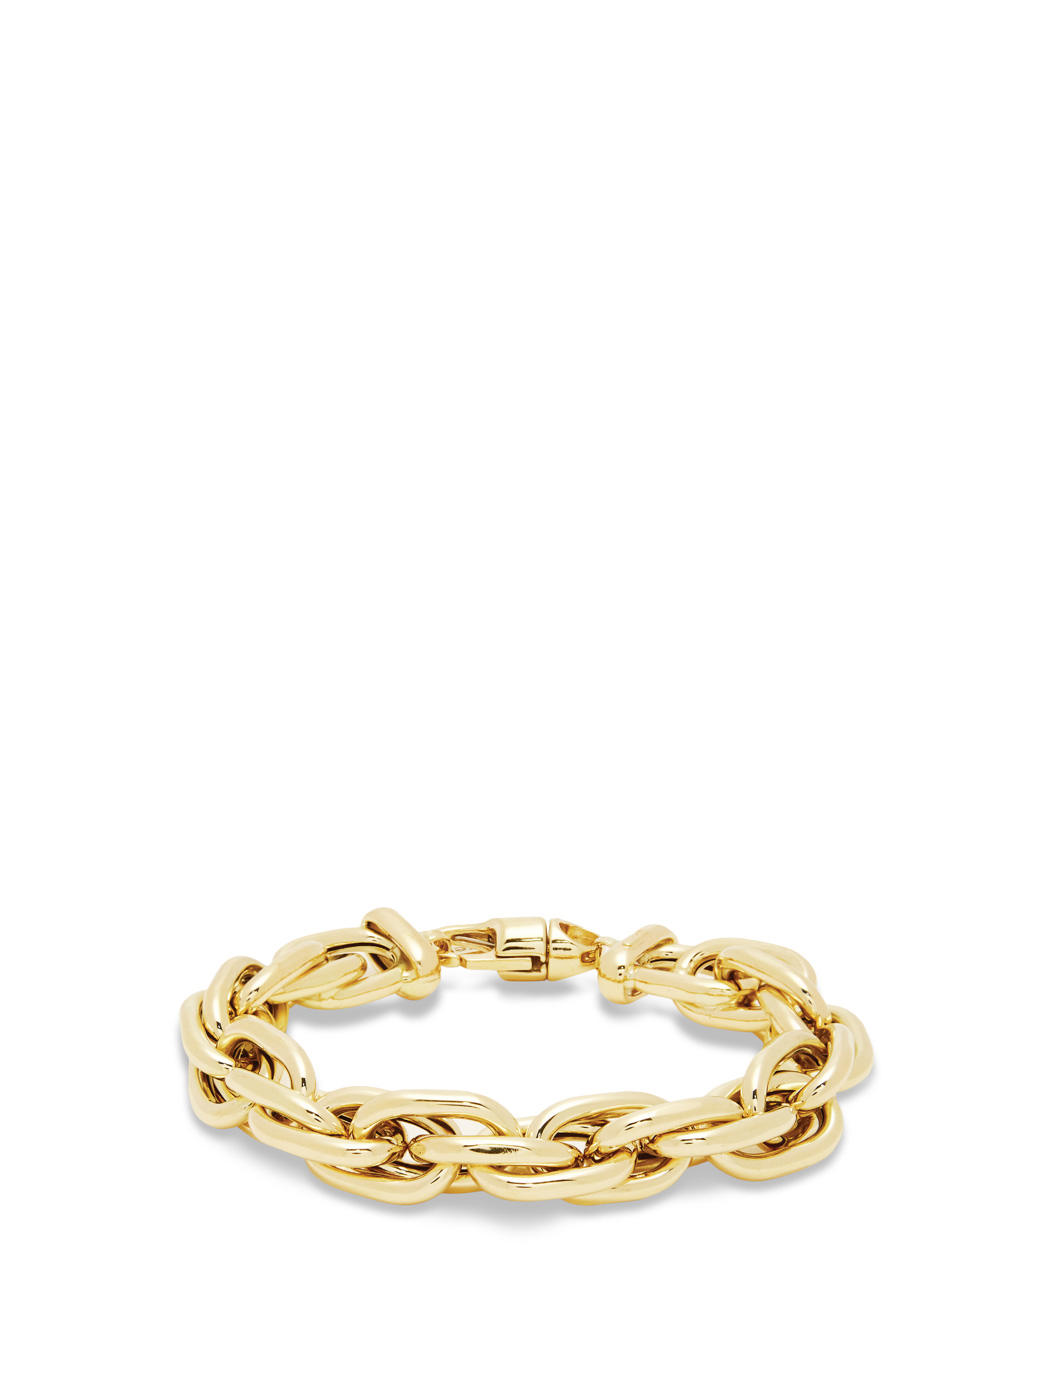 42 Lauren Rubinski, Cable Chain 14kt Gold Bracelet, Matchesfashion.com